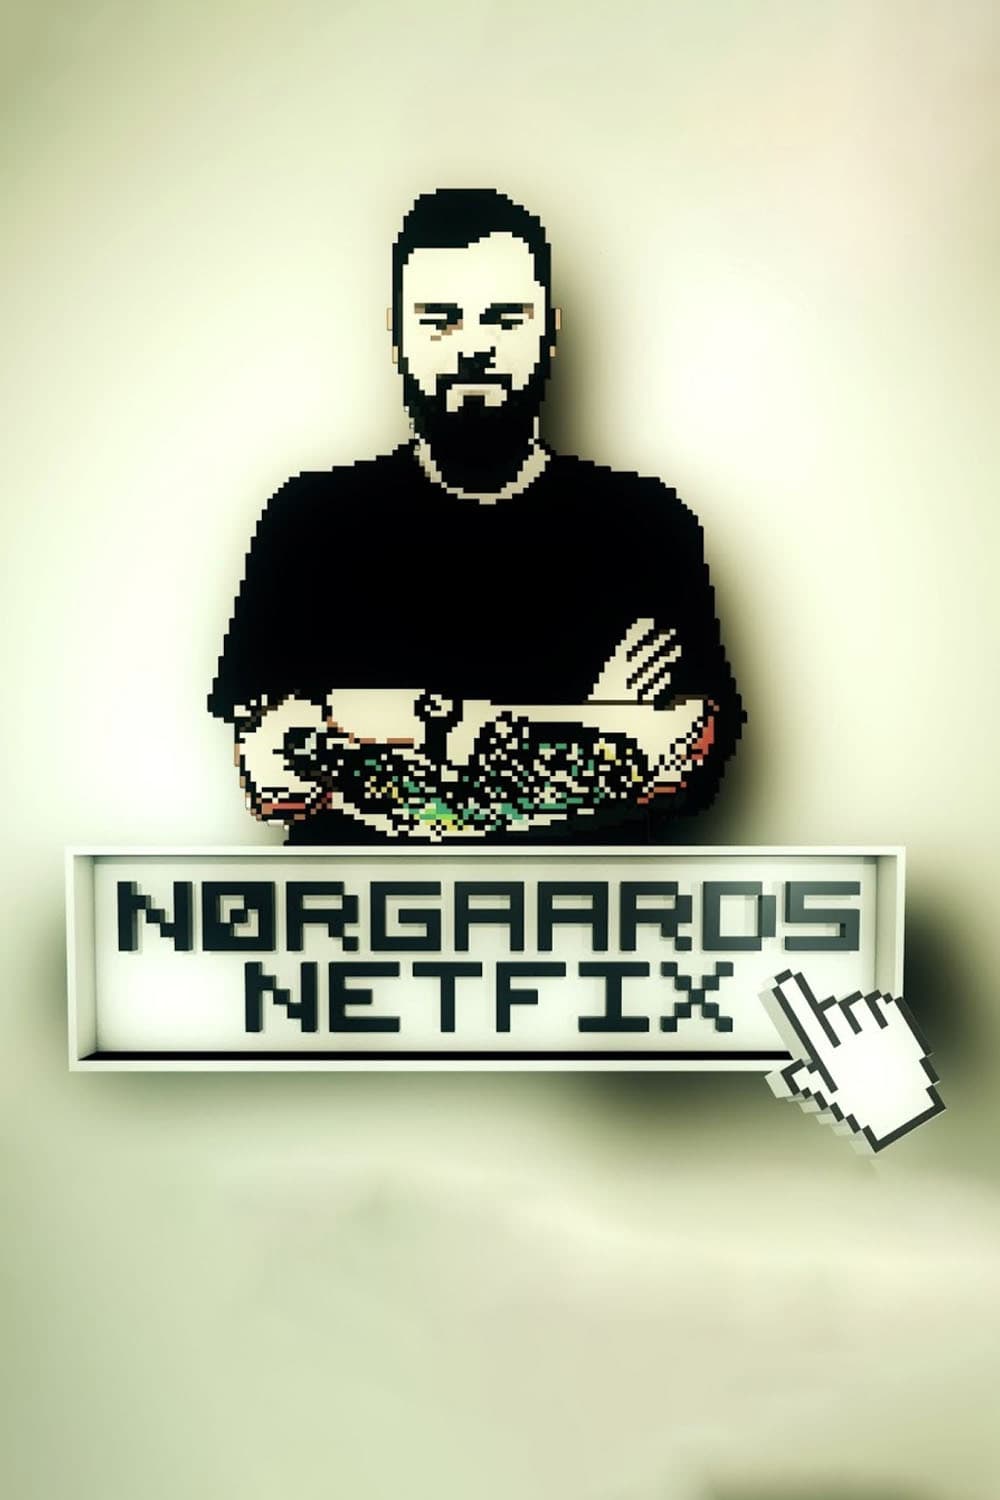 Nørgaards netfix